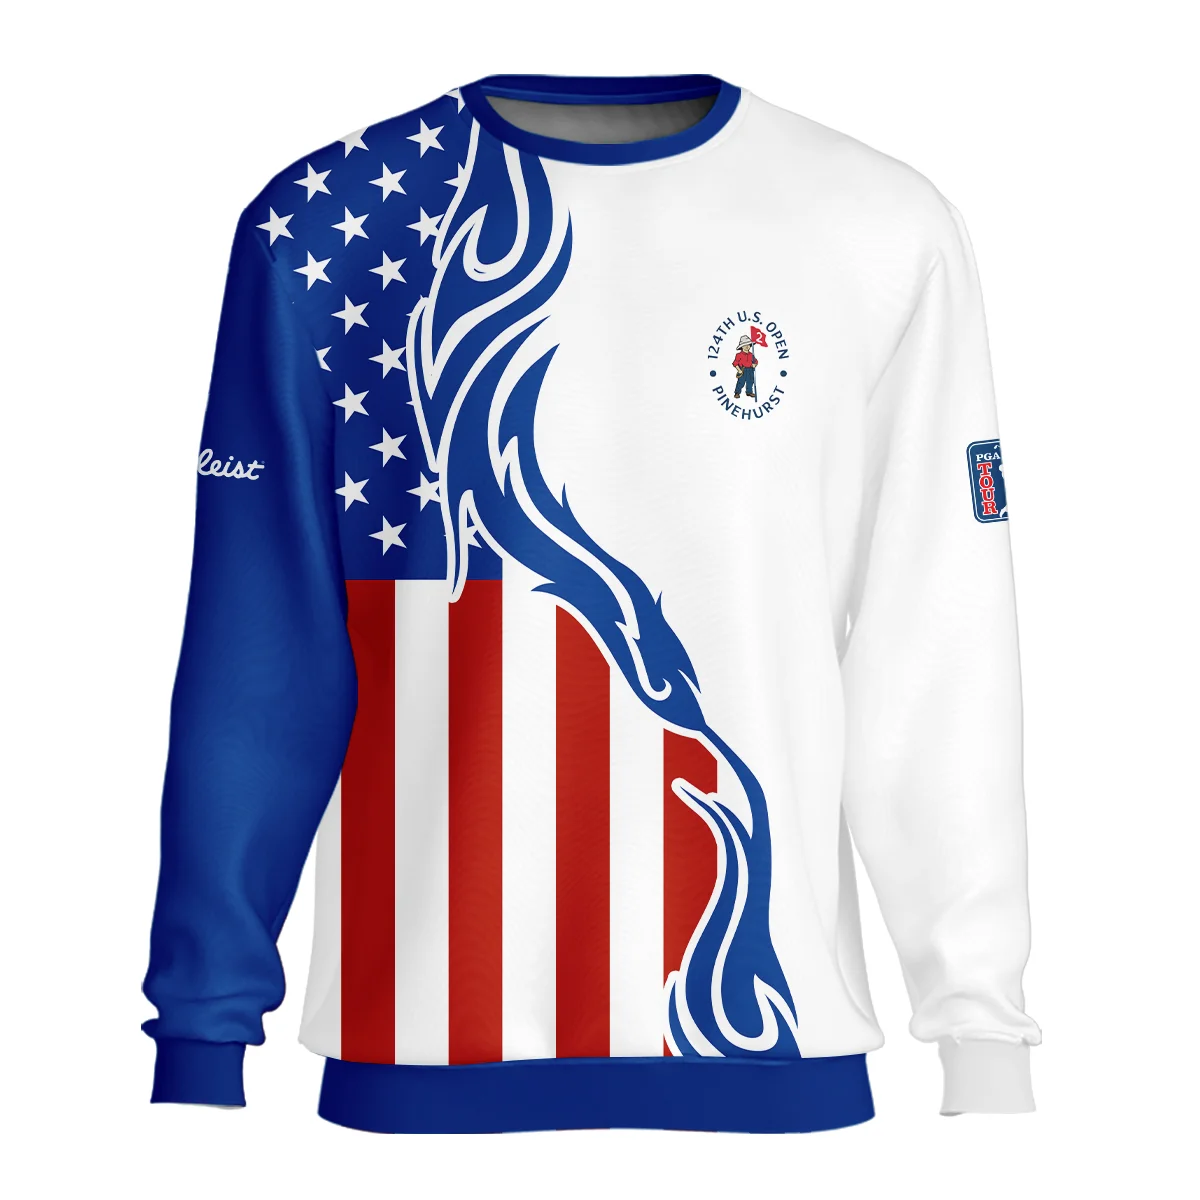 Golf Sport Titleist 124th U.S. Open Pinehurst Sleeveless Jacket USA Flag Pattern Blue White All Over Print Sleeveless Jacket